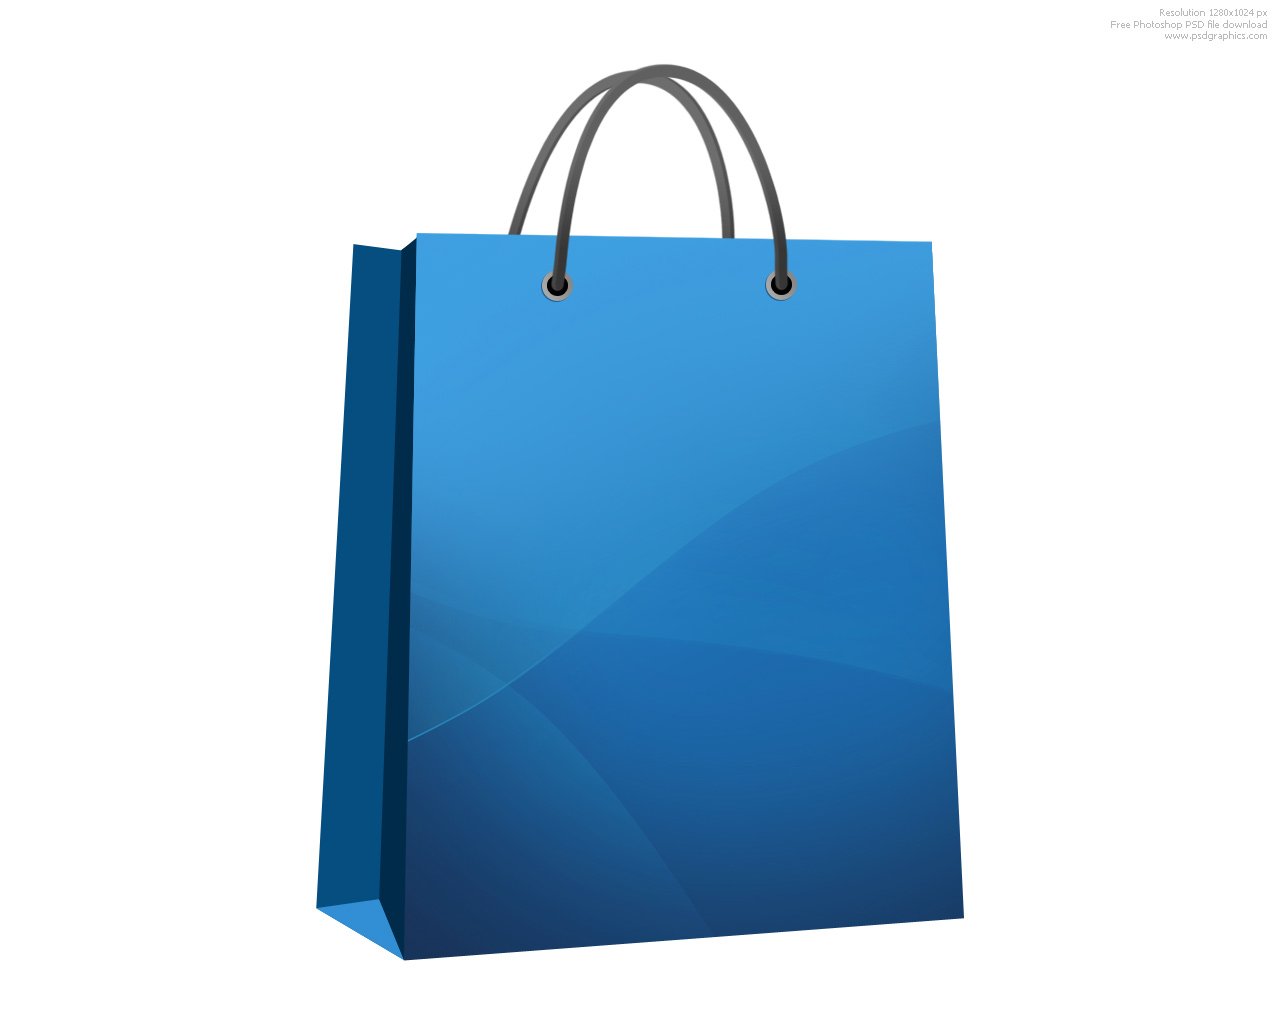 Shopping Bag Image. Free Download Clip Art. Free Clip Art